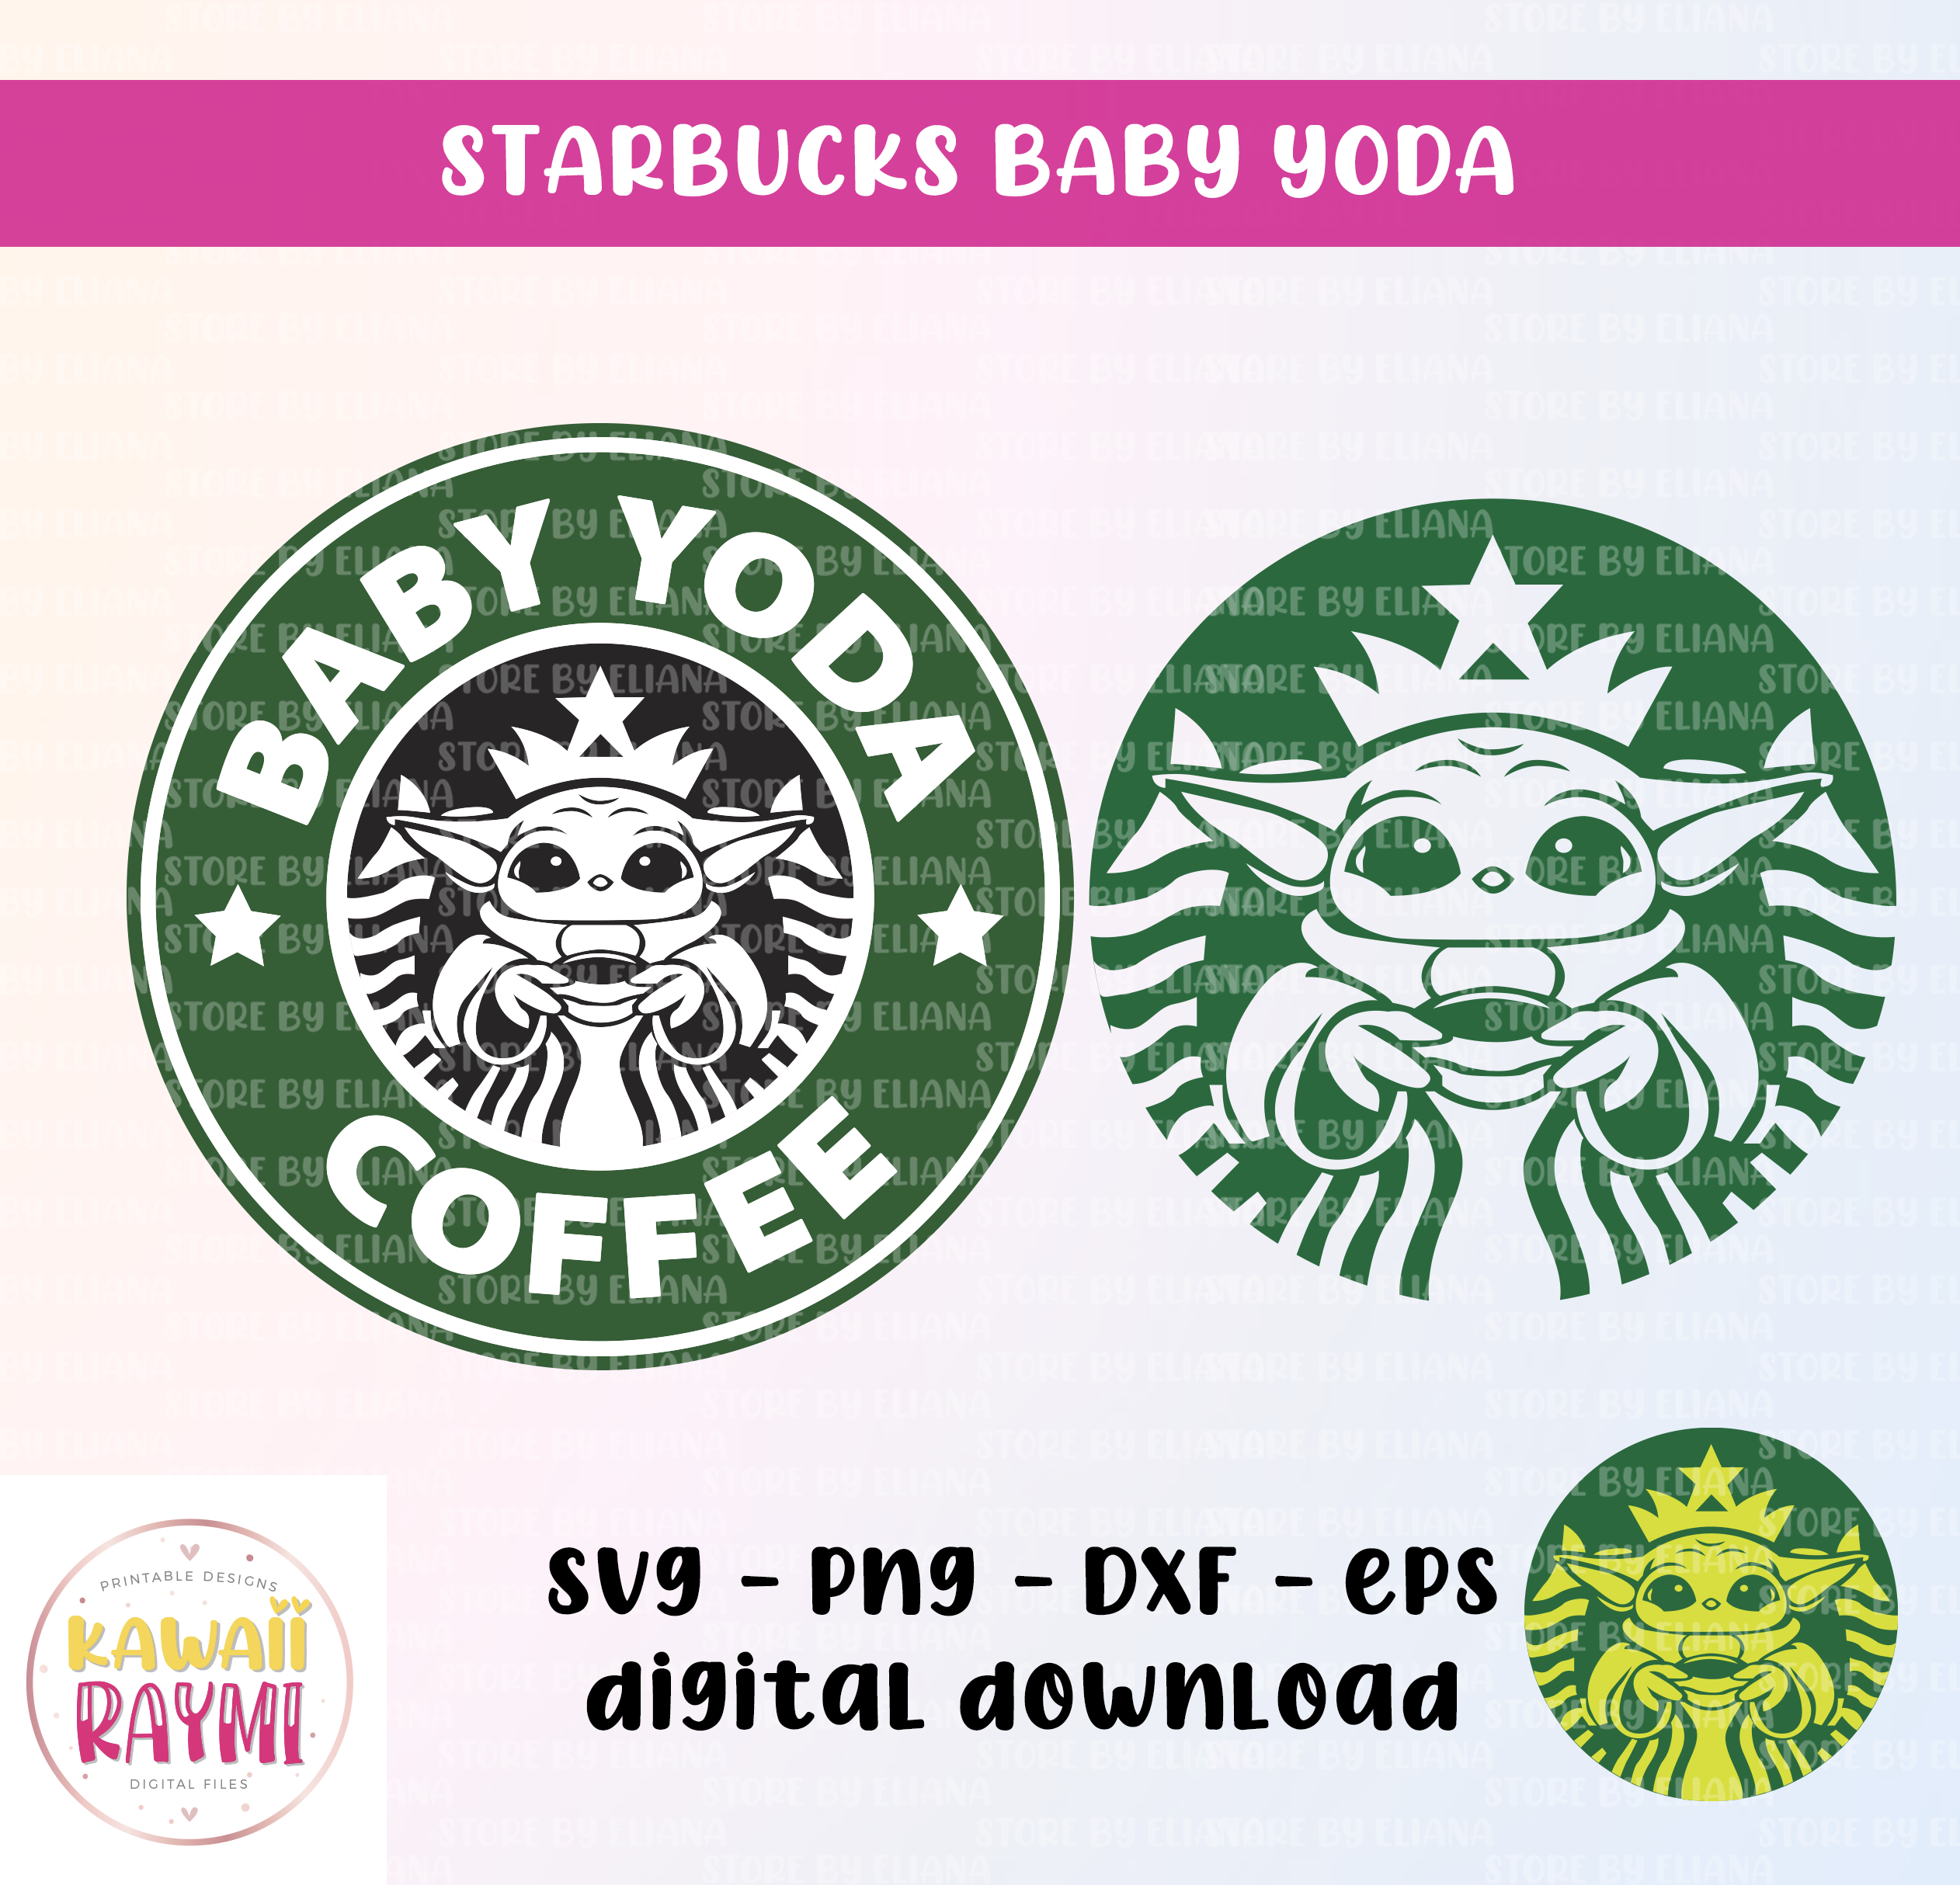 Starbucks Baby Yoda Full Wrap, Digital Files - free svg files for